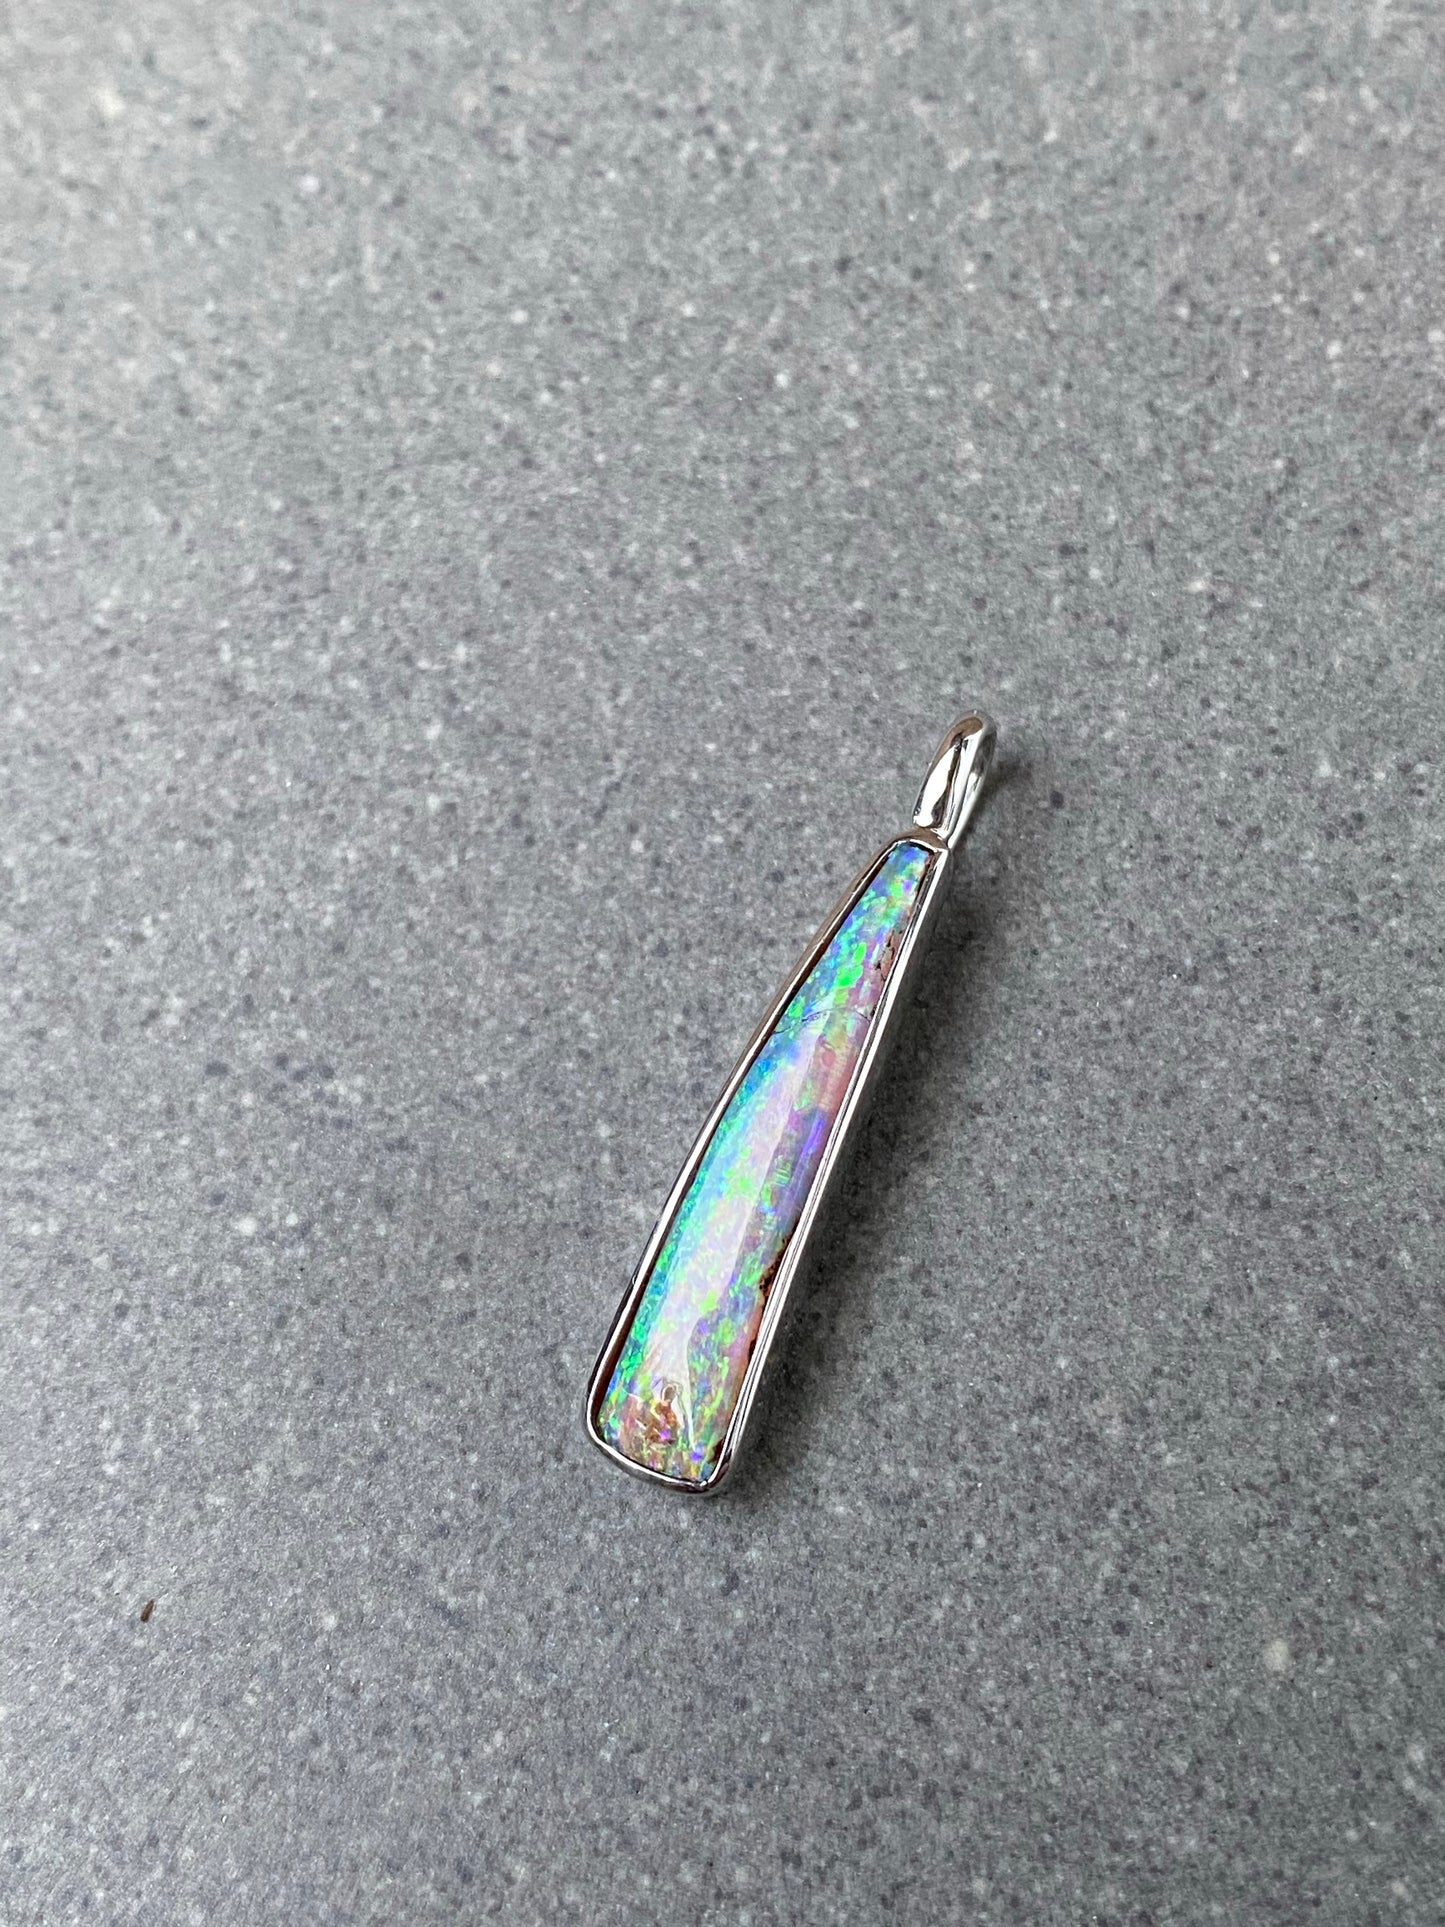 Australian Opal pendant in white gold